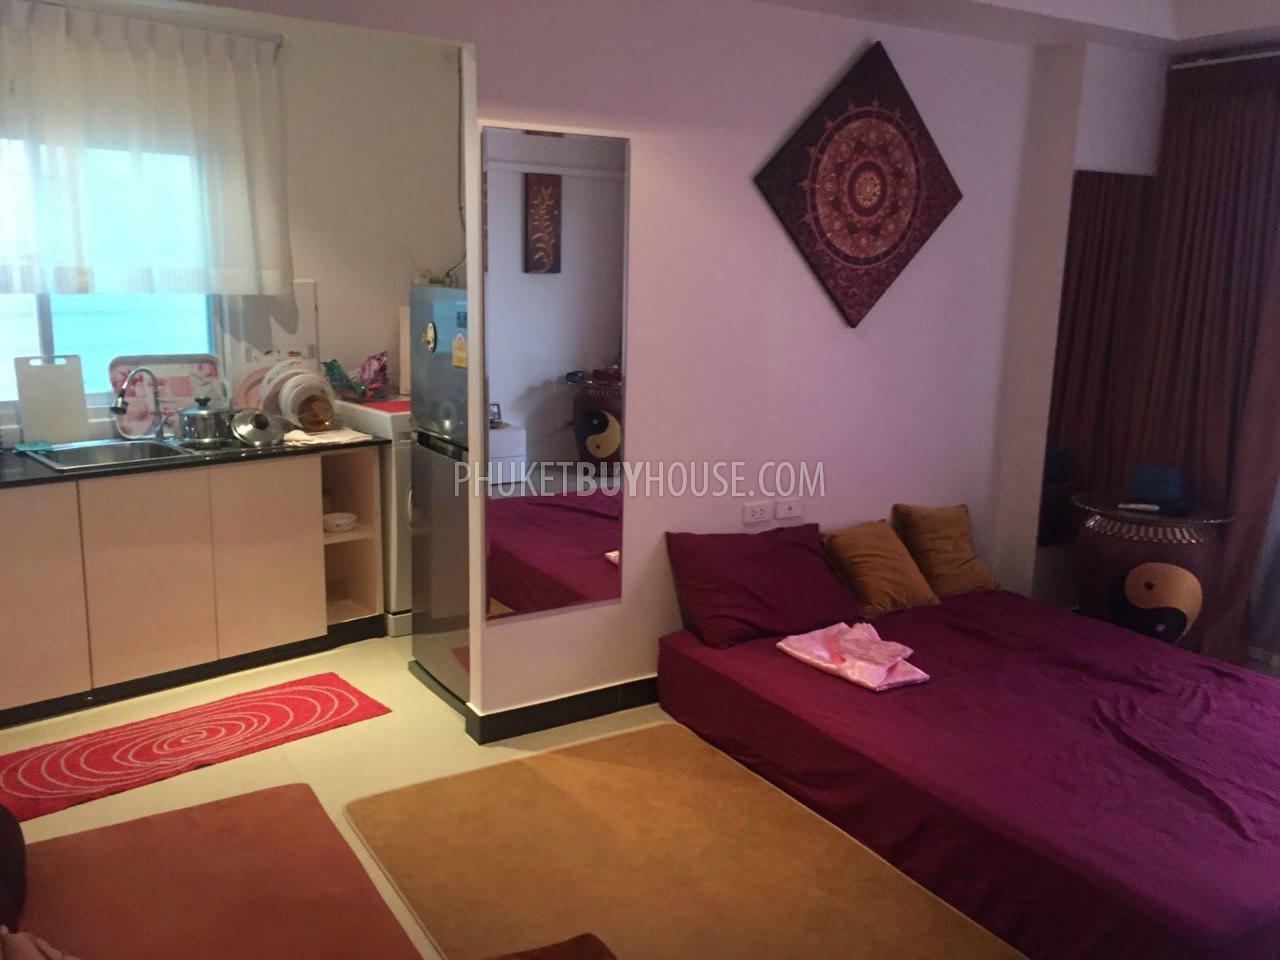 NAI6090: One bedroom beautiful apartment in Nai Harn. Photo #4